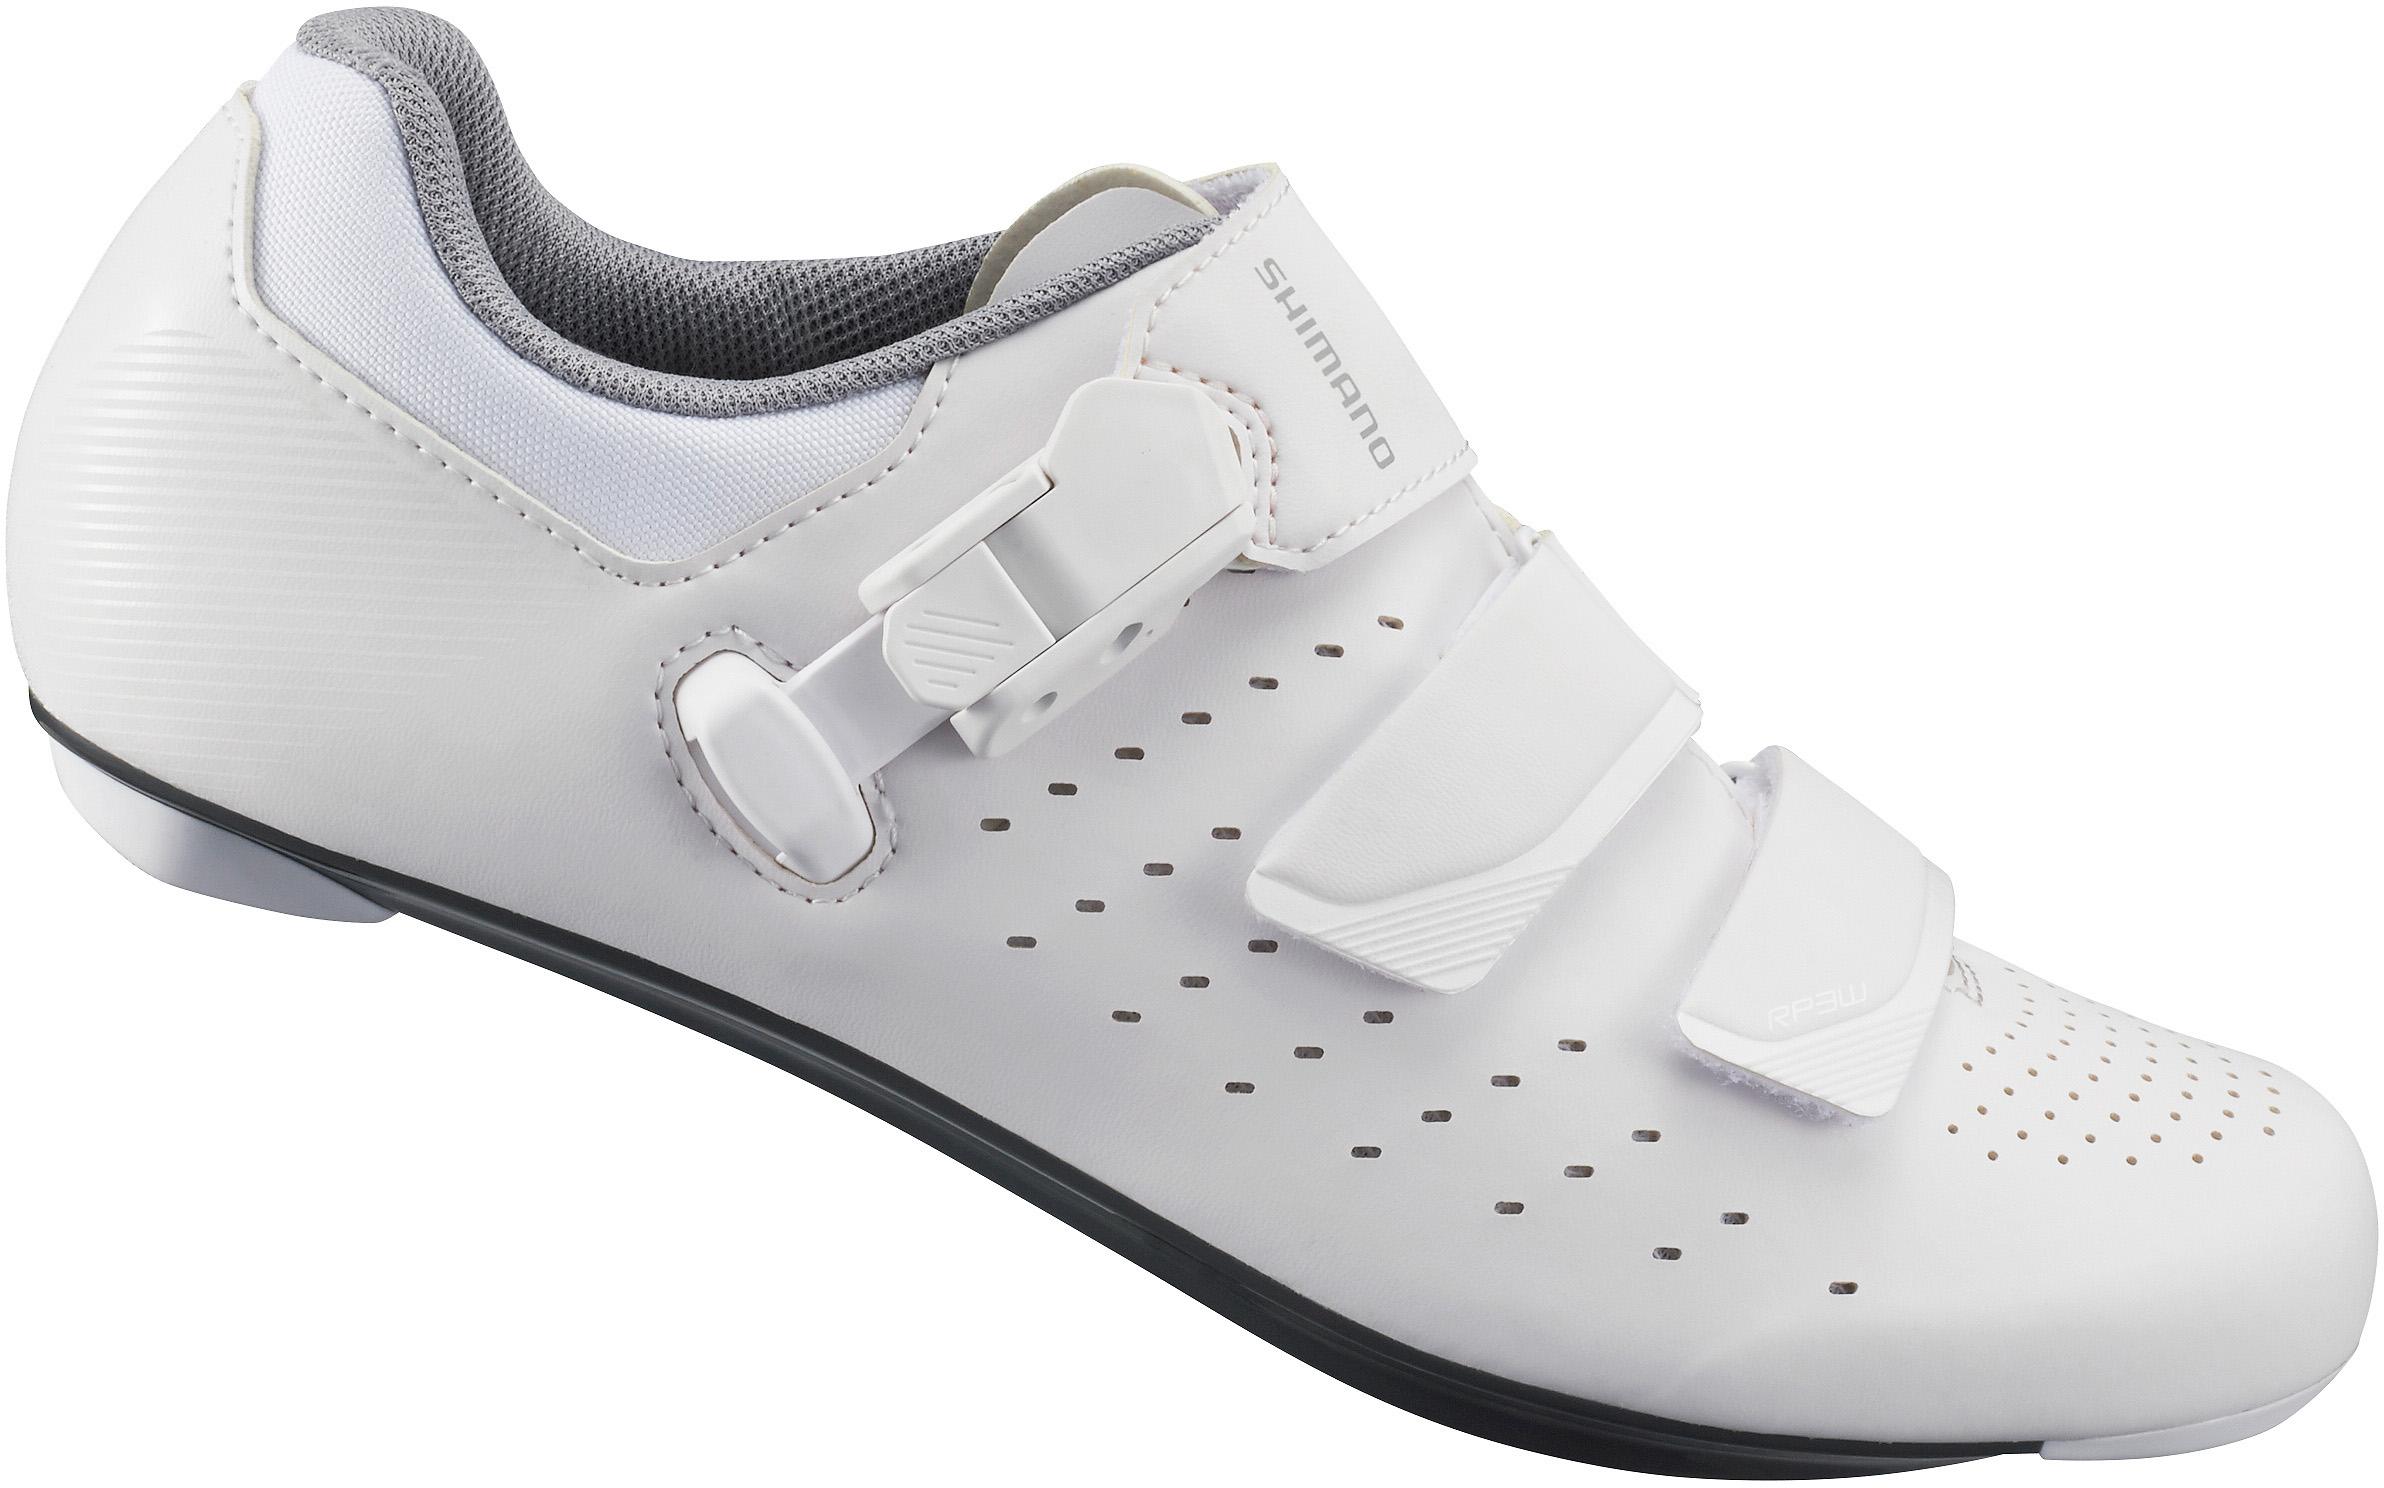 Rp3W (Rp301W) Spd-Sl Womens Shoes, White, Size 36